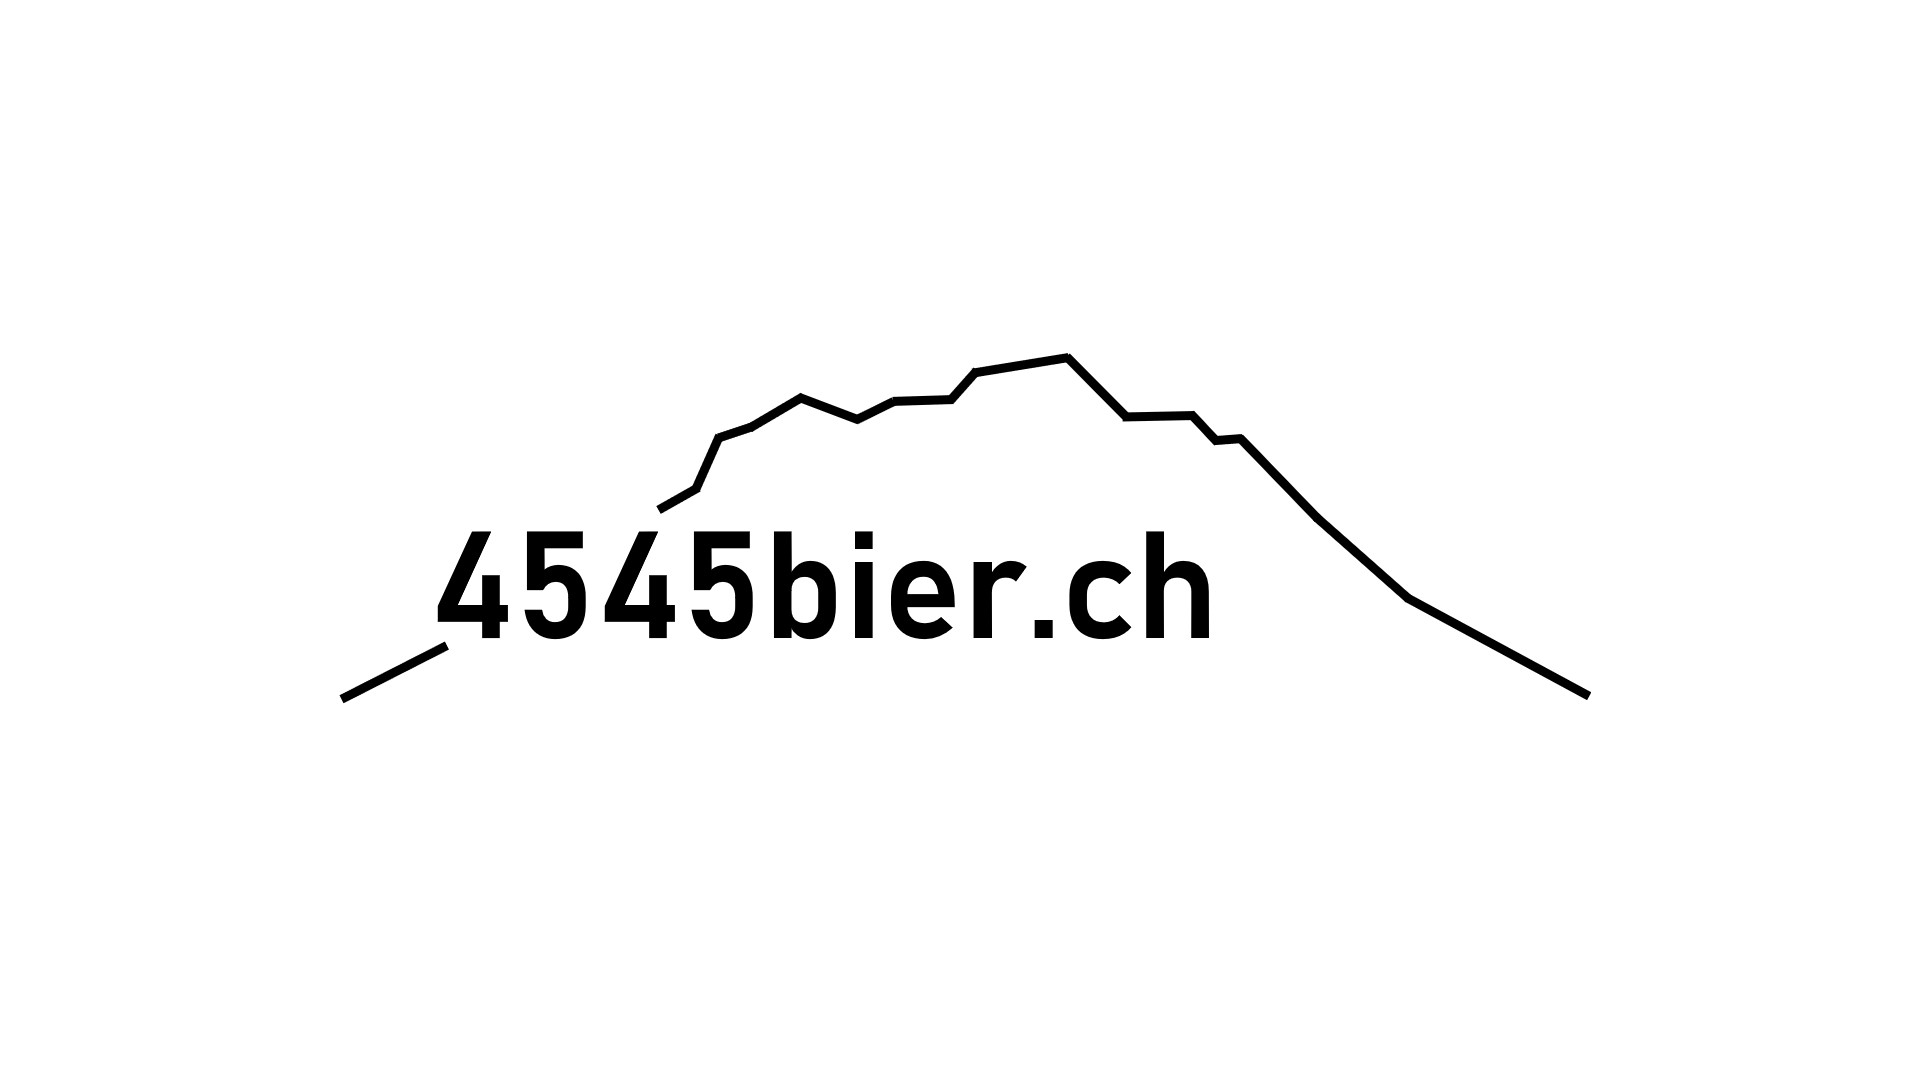 4545bier.ch